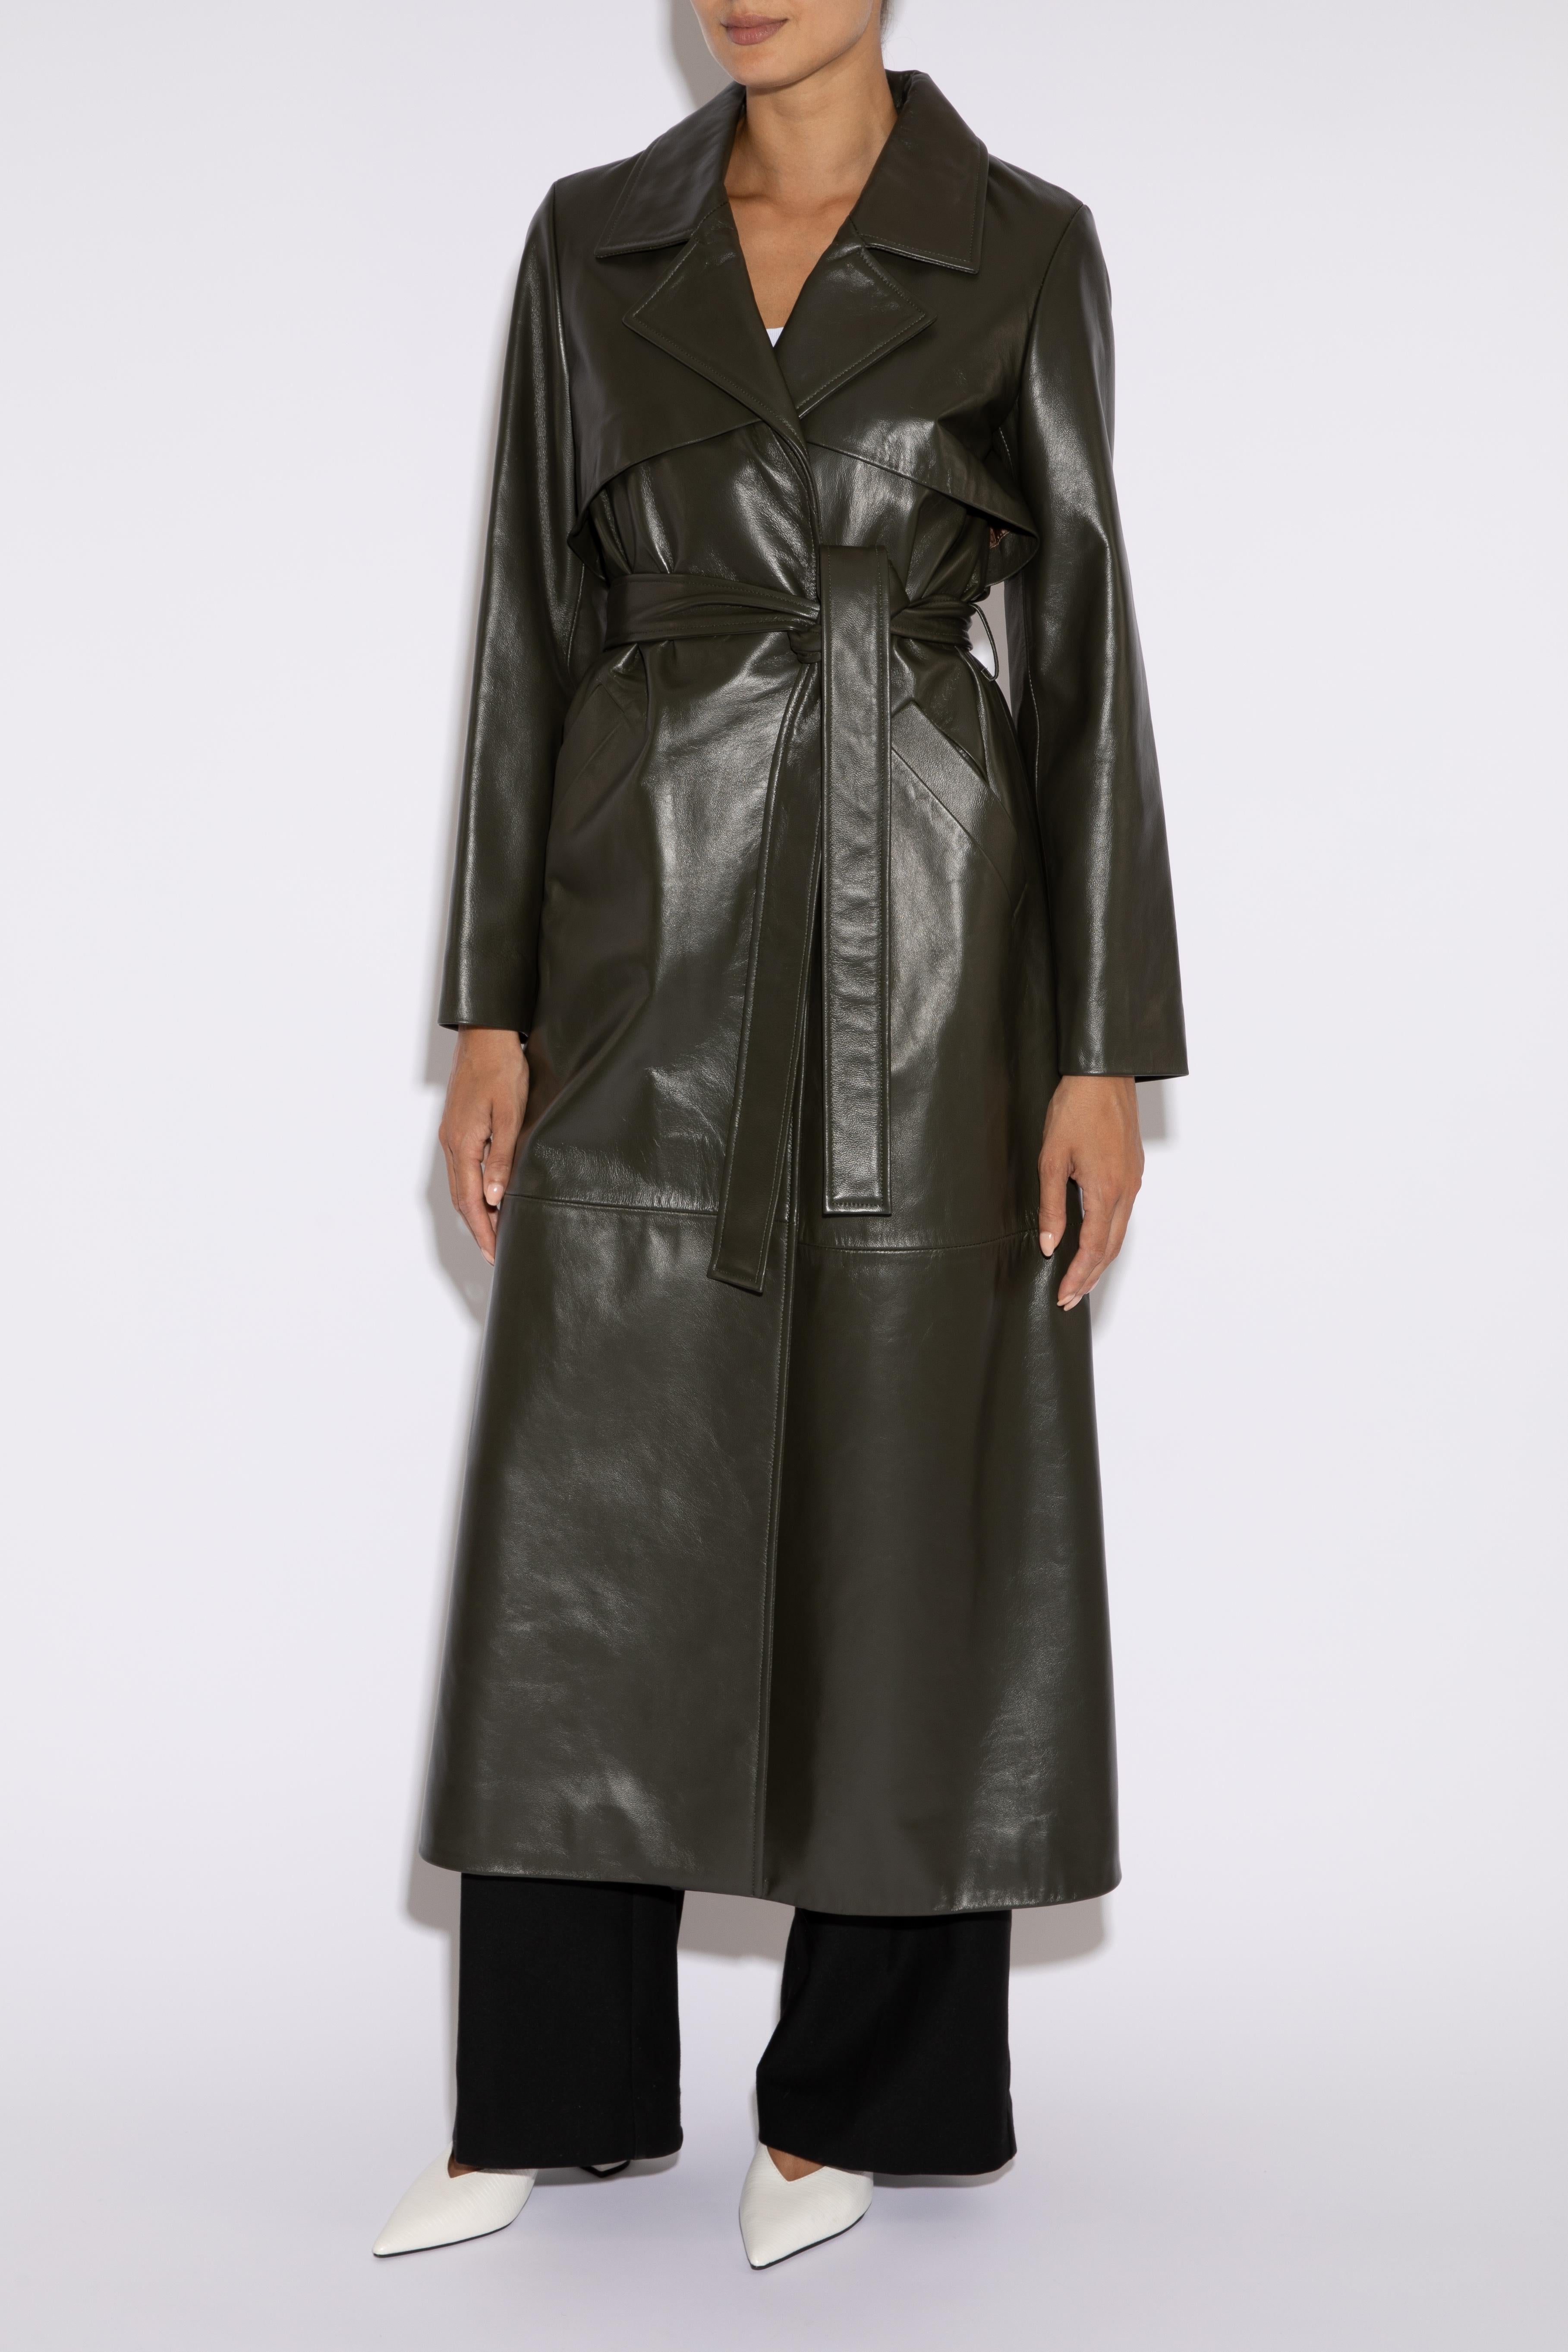 Beige Verheyen London Leather Trench Coat in Dark Khaki Green - Size uk 8 For Sale